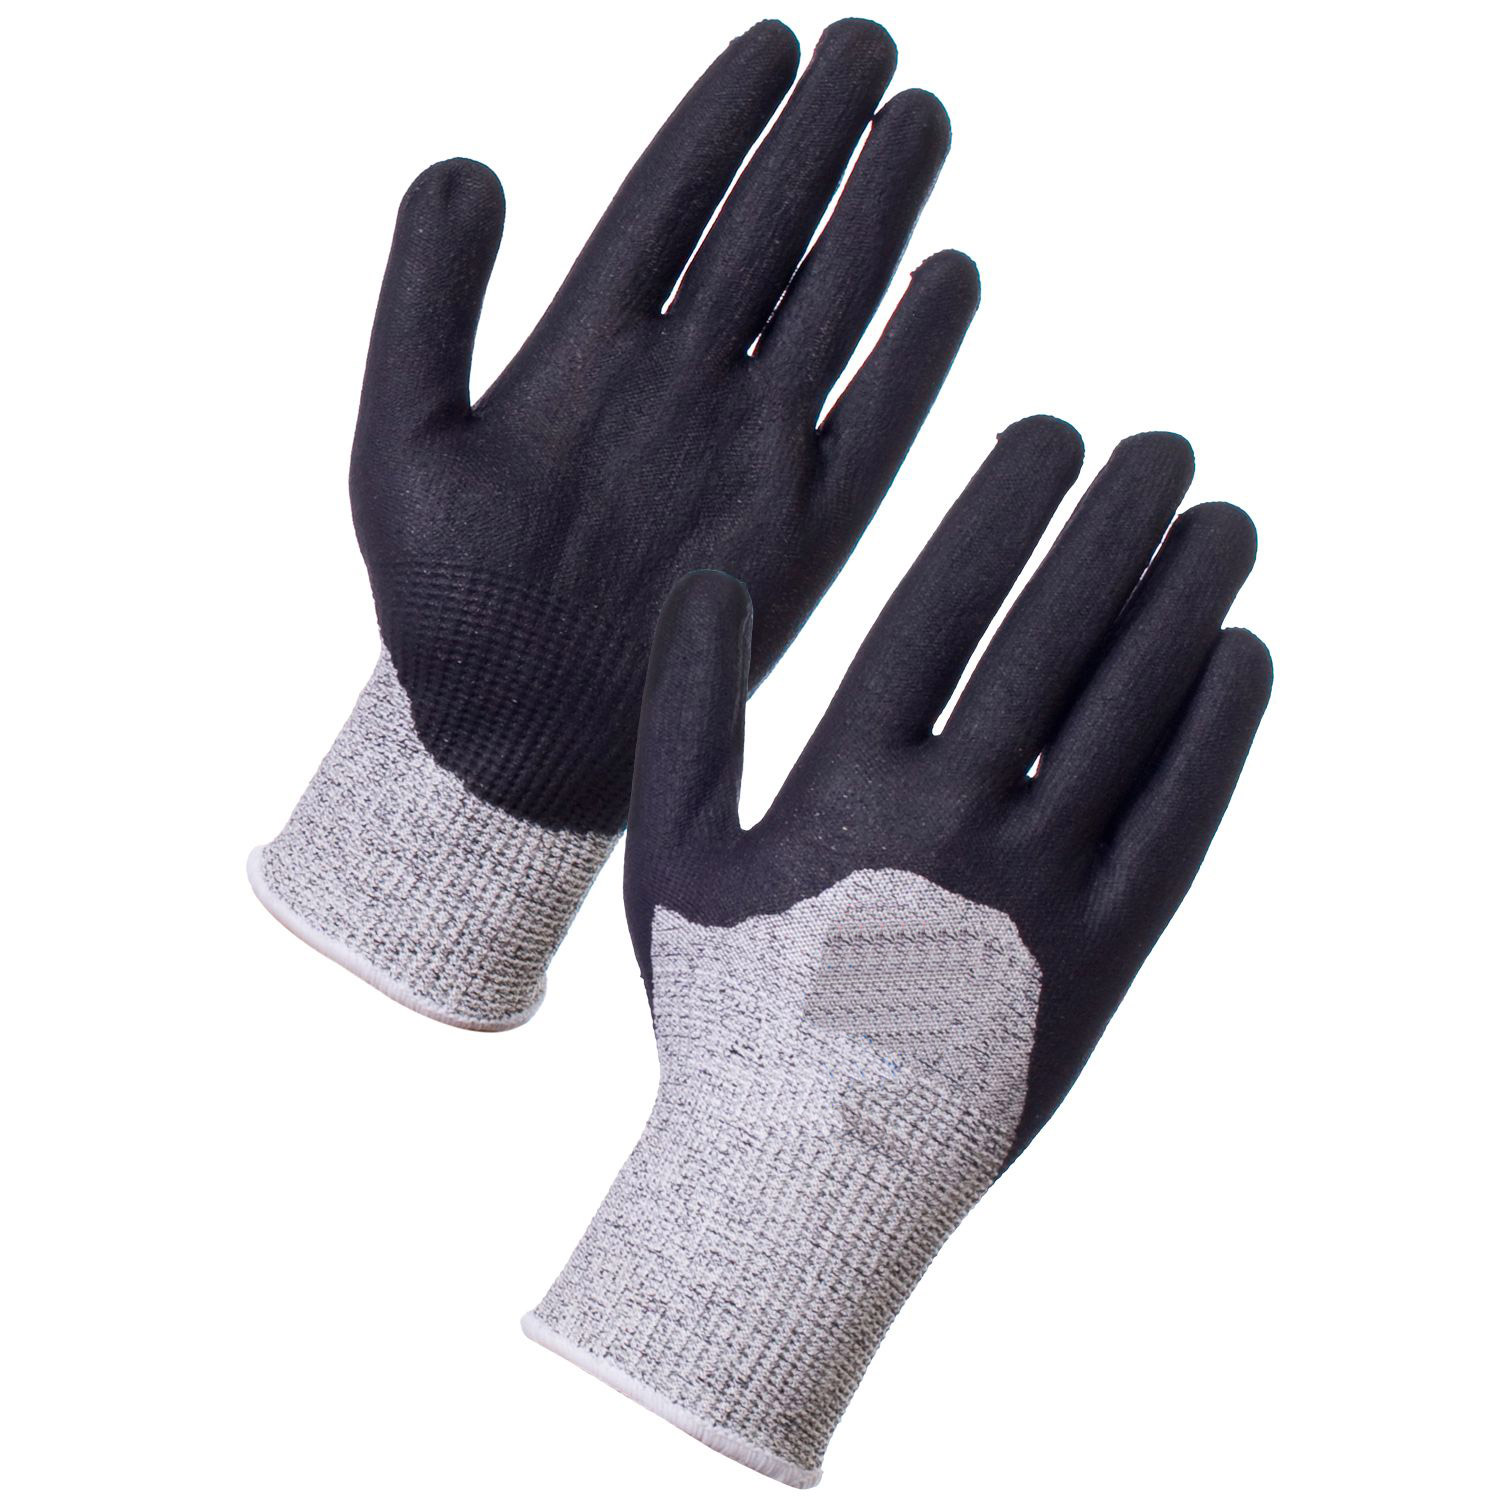 Deflector 5 Cut Resistant Gloves